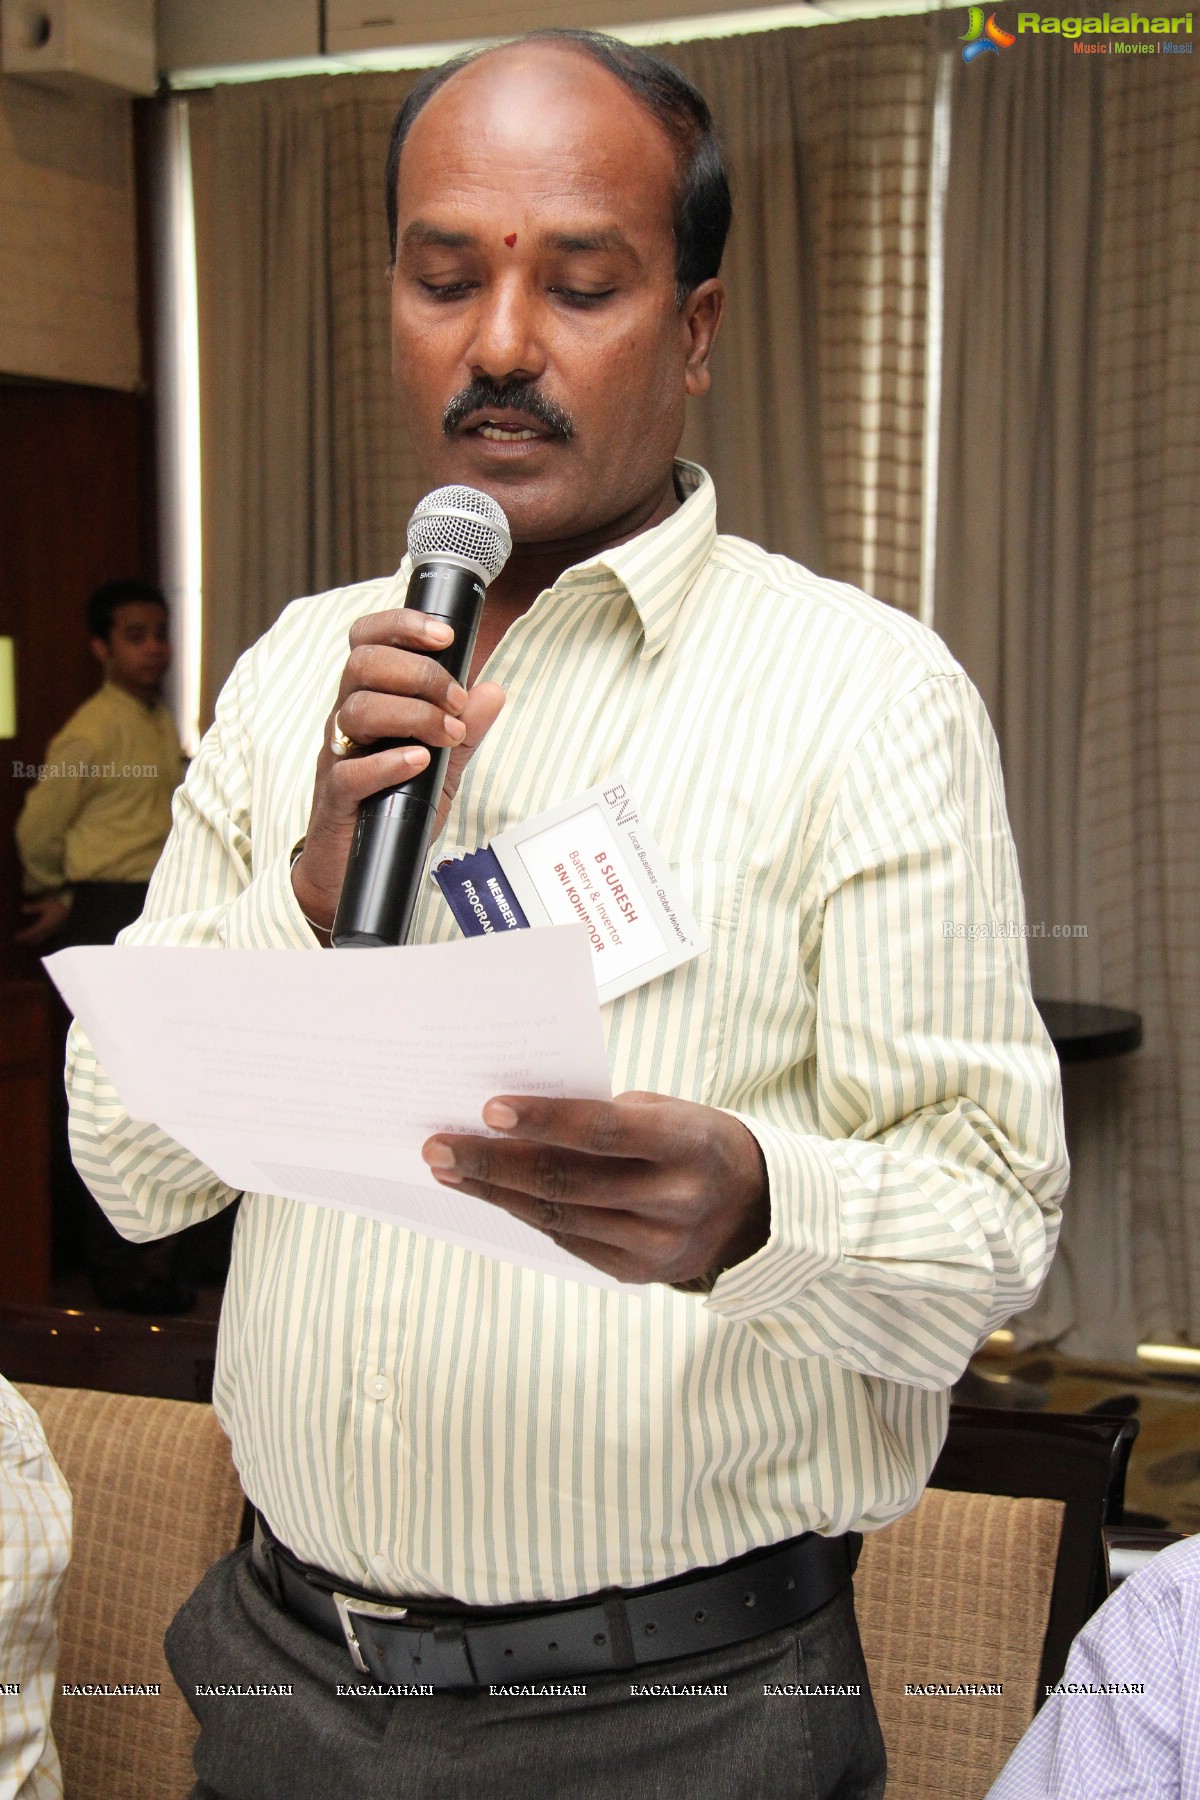 BNI Kohinoor Meet at Fortune Park Vallabha, Hyderabad (August 6, 2014)